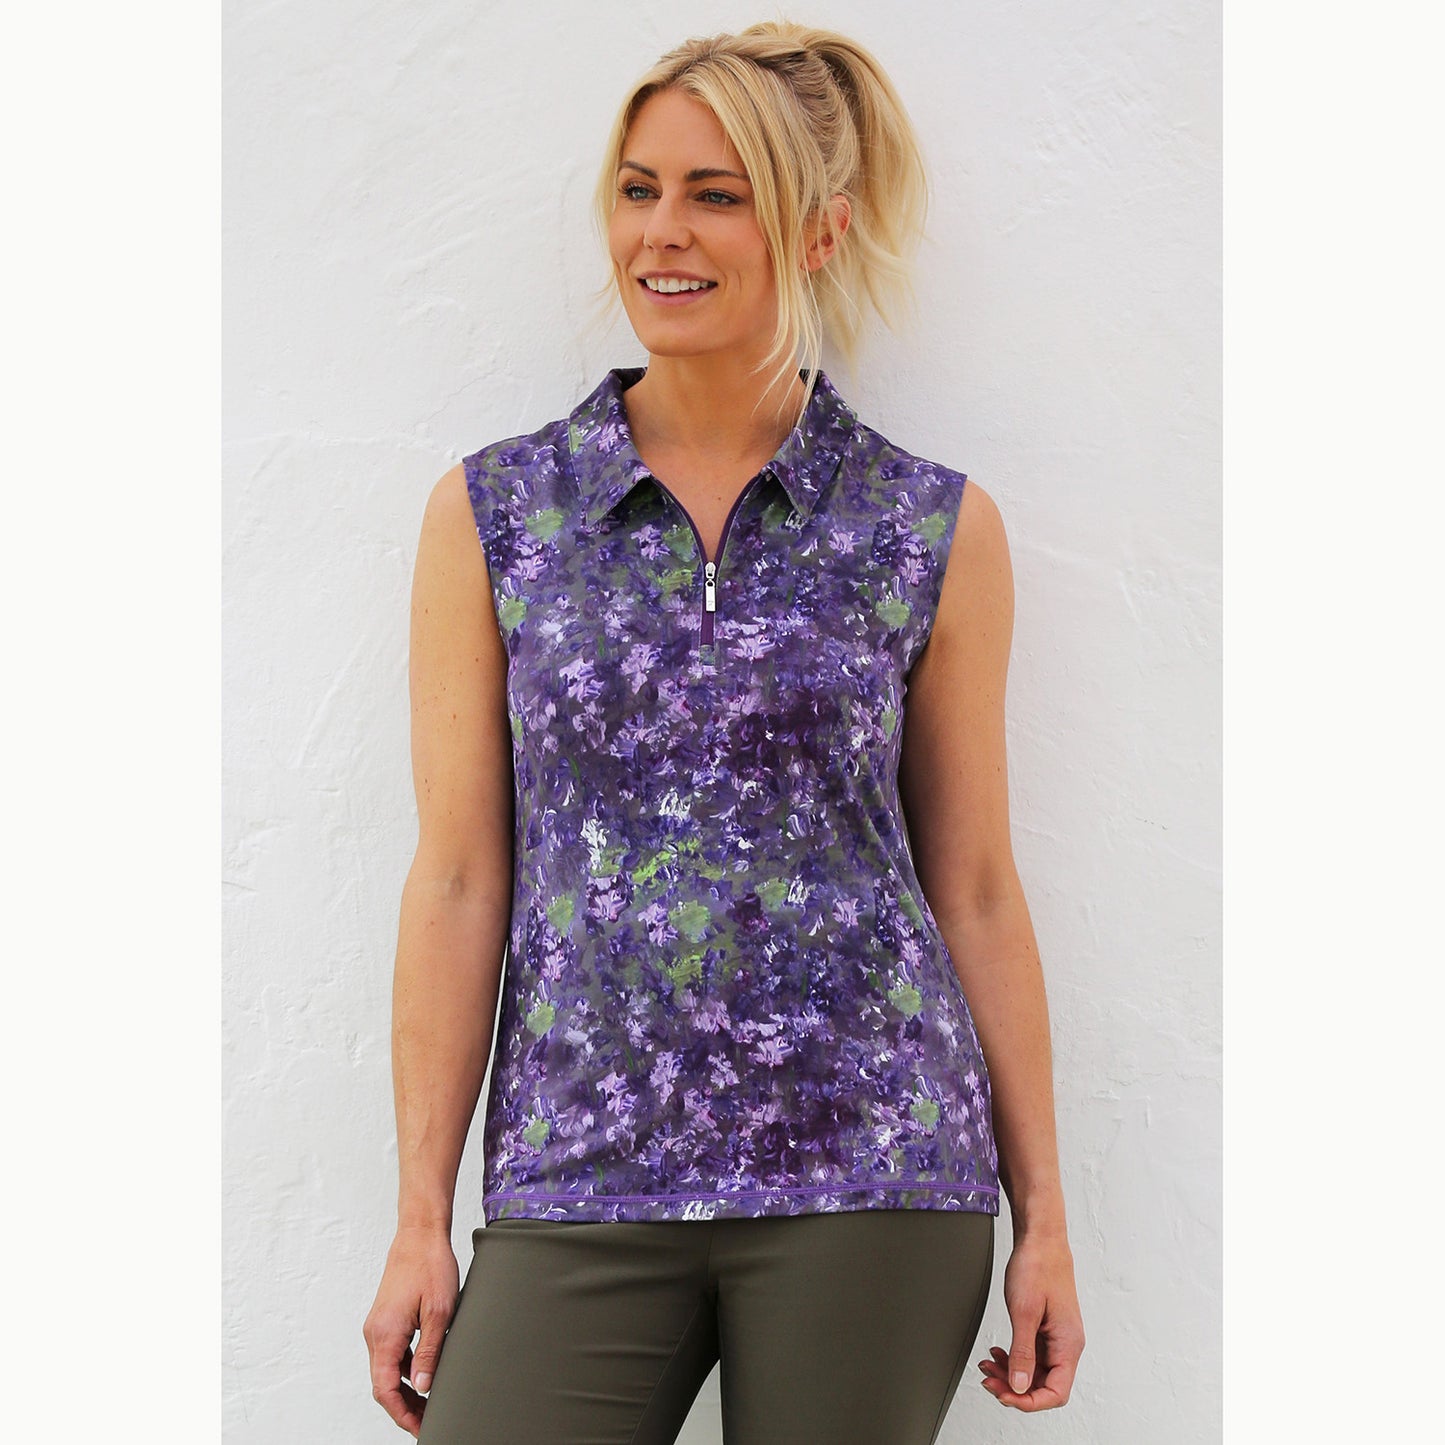 FAMARA Ladies Sleeveless Shirt In Abstract Flower Print